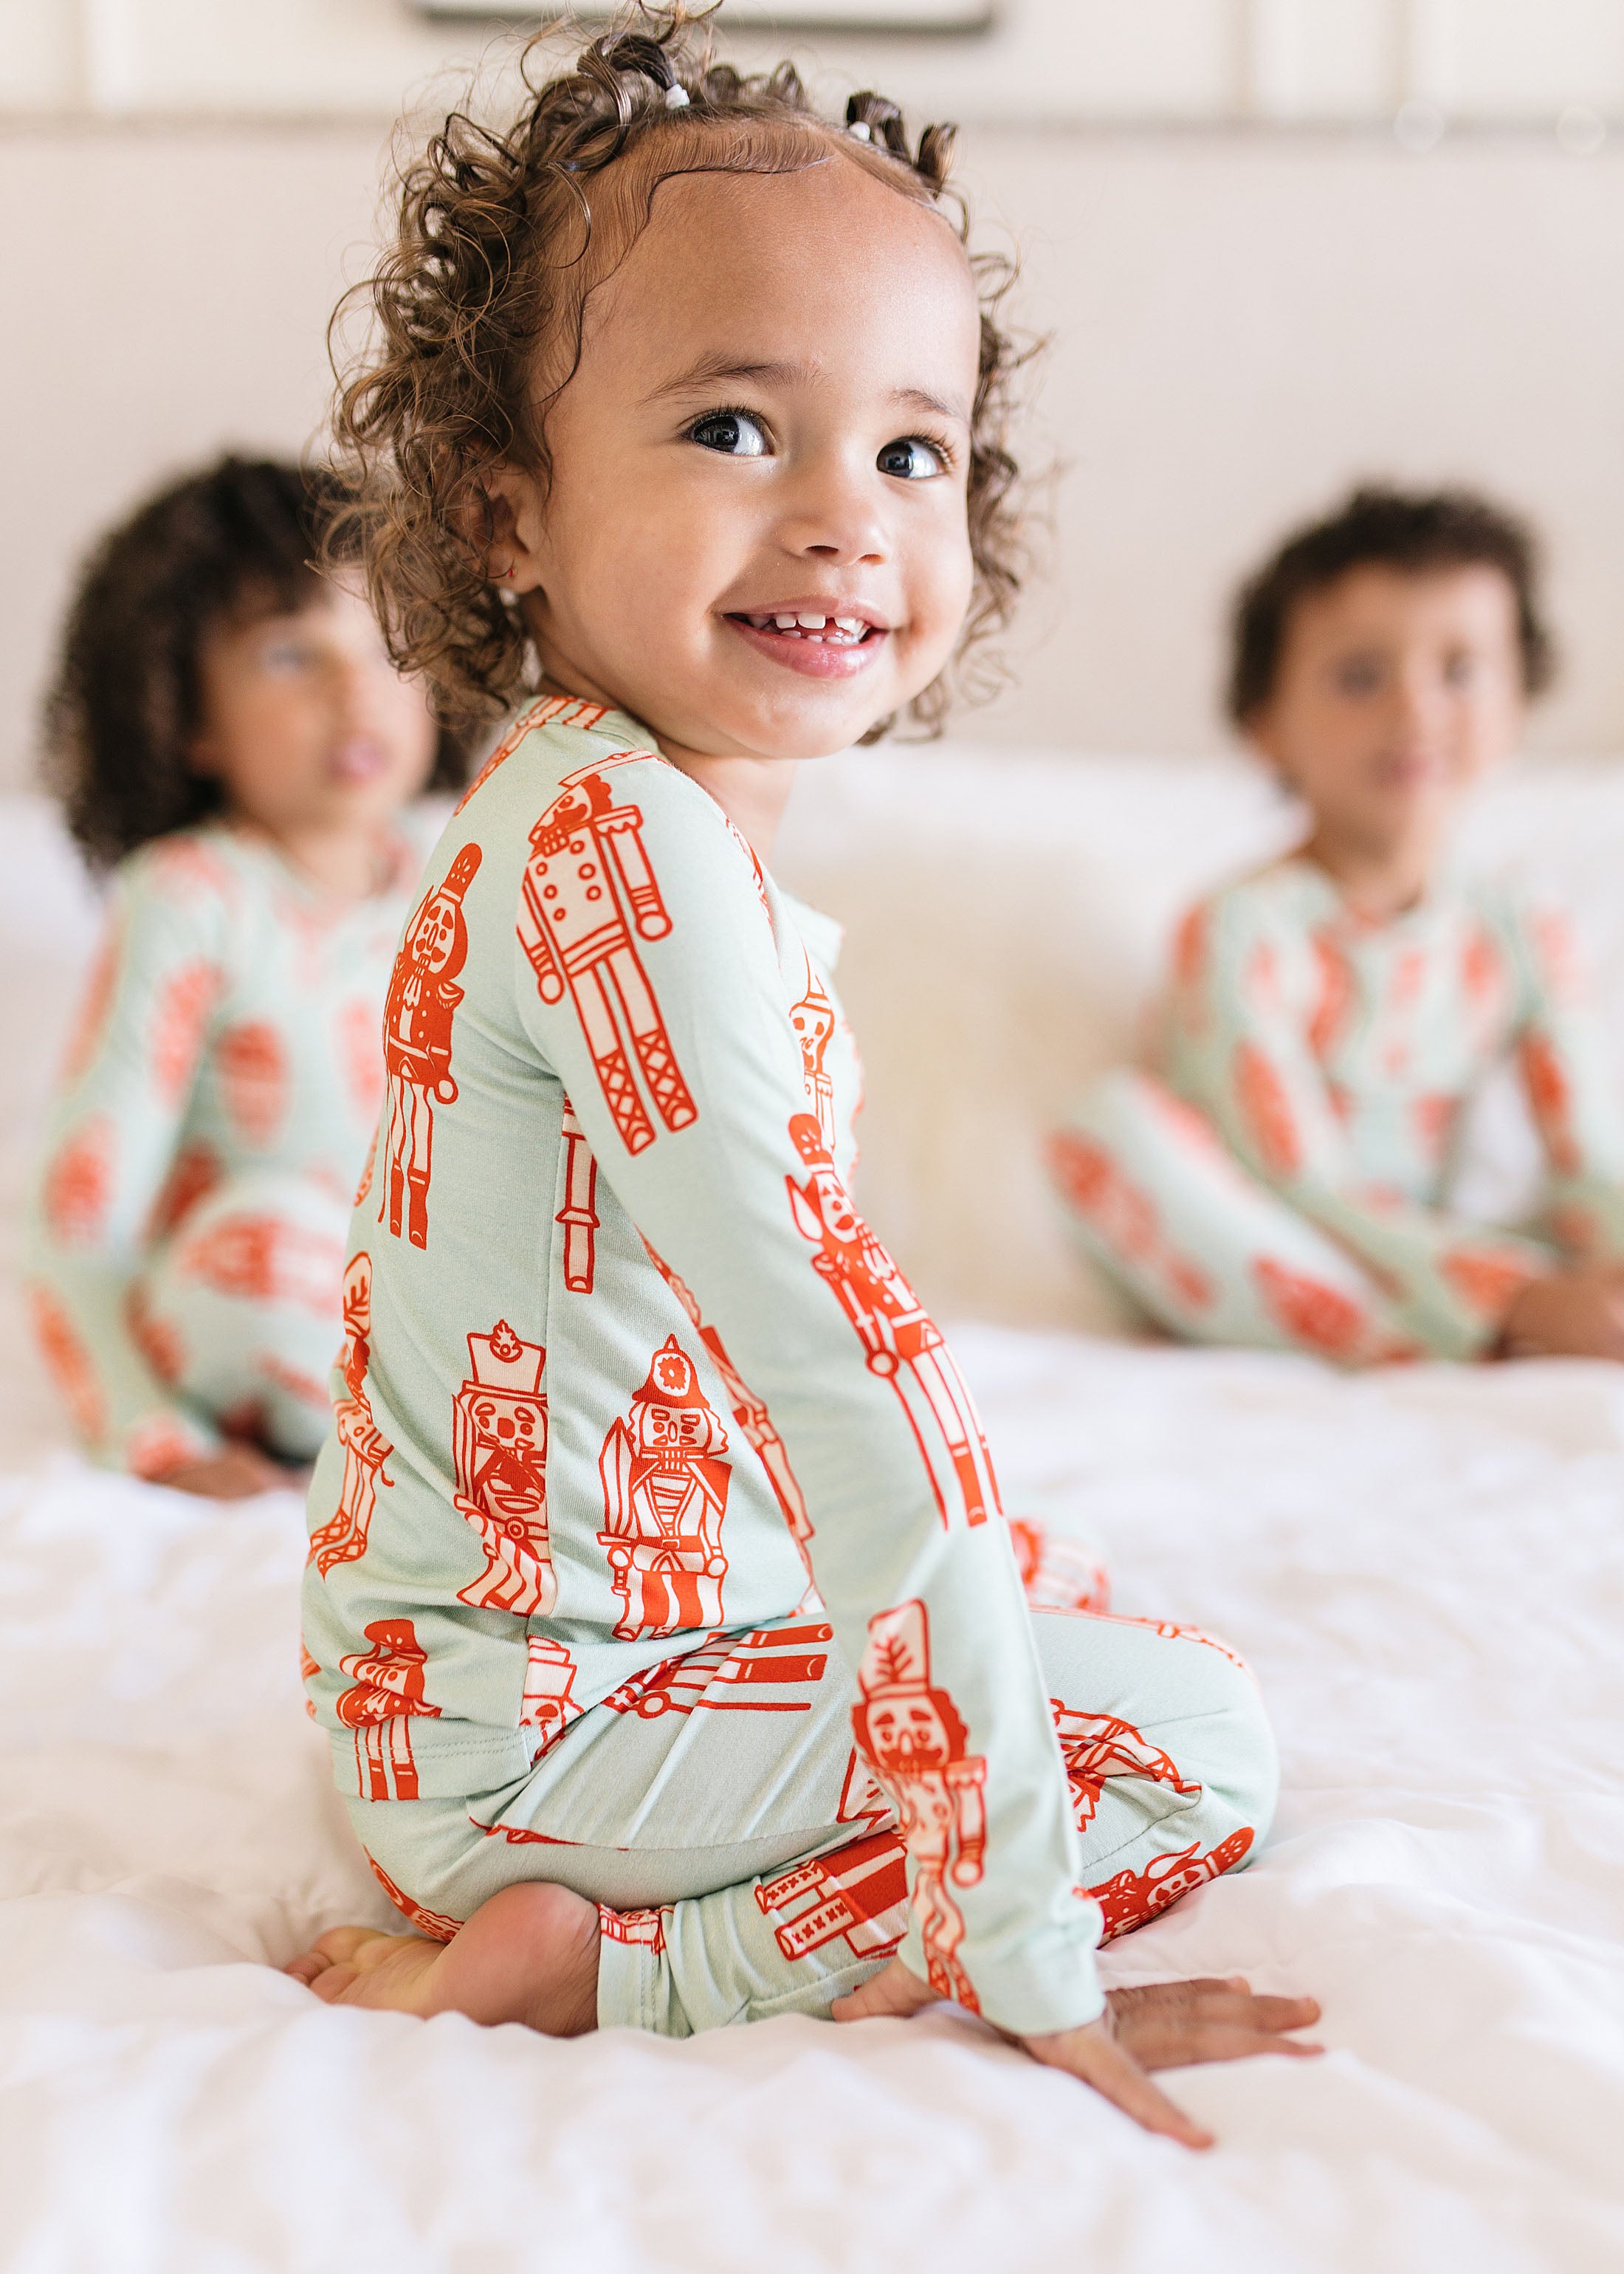 Nutcracker Pajama Set